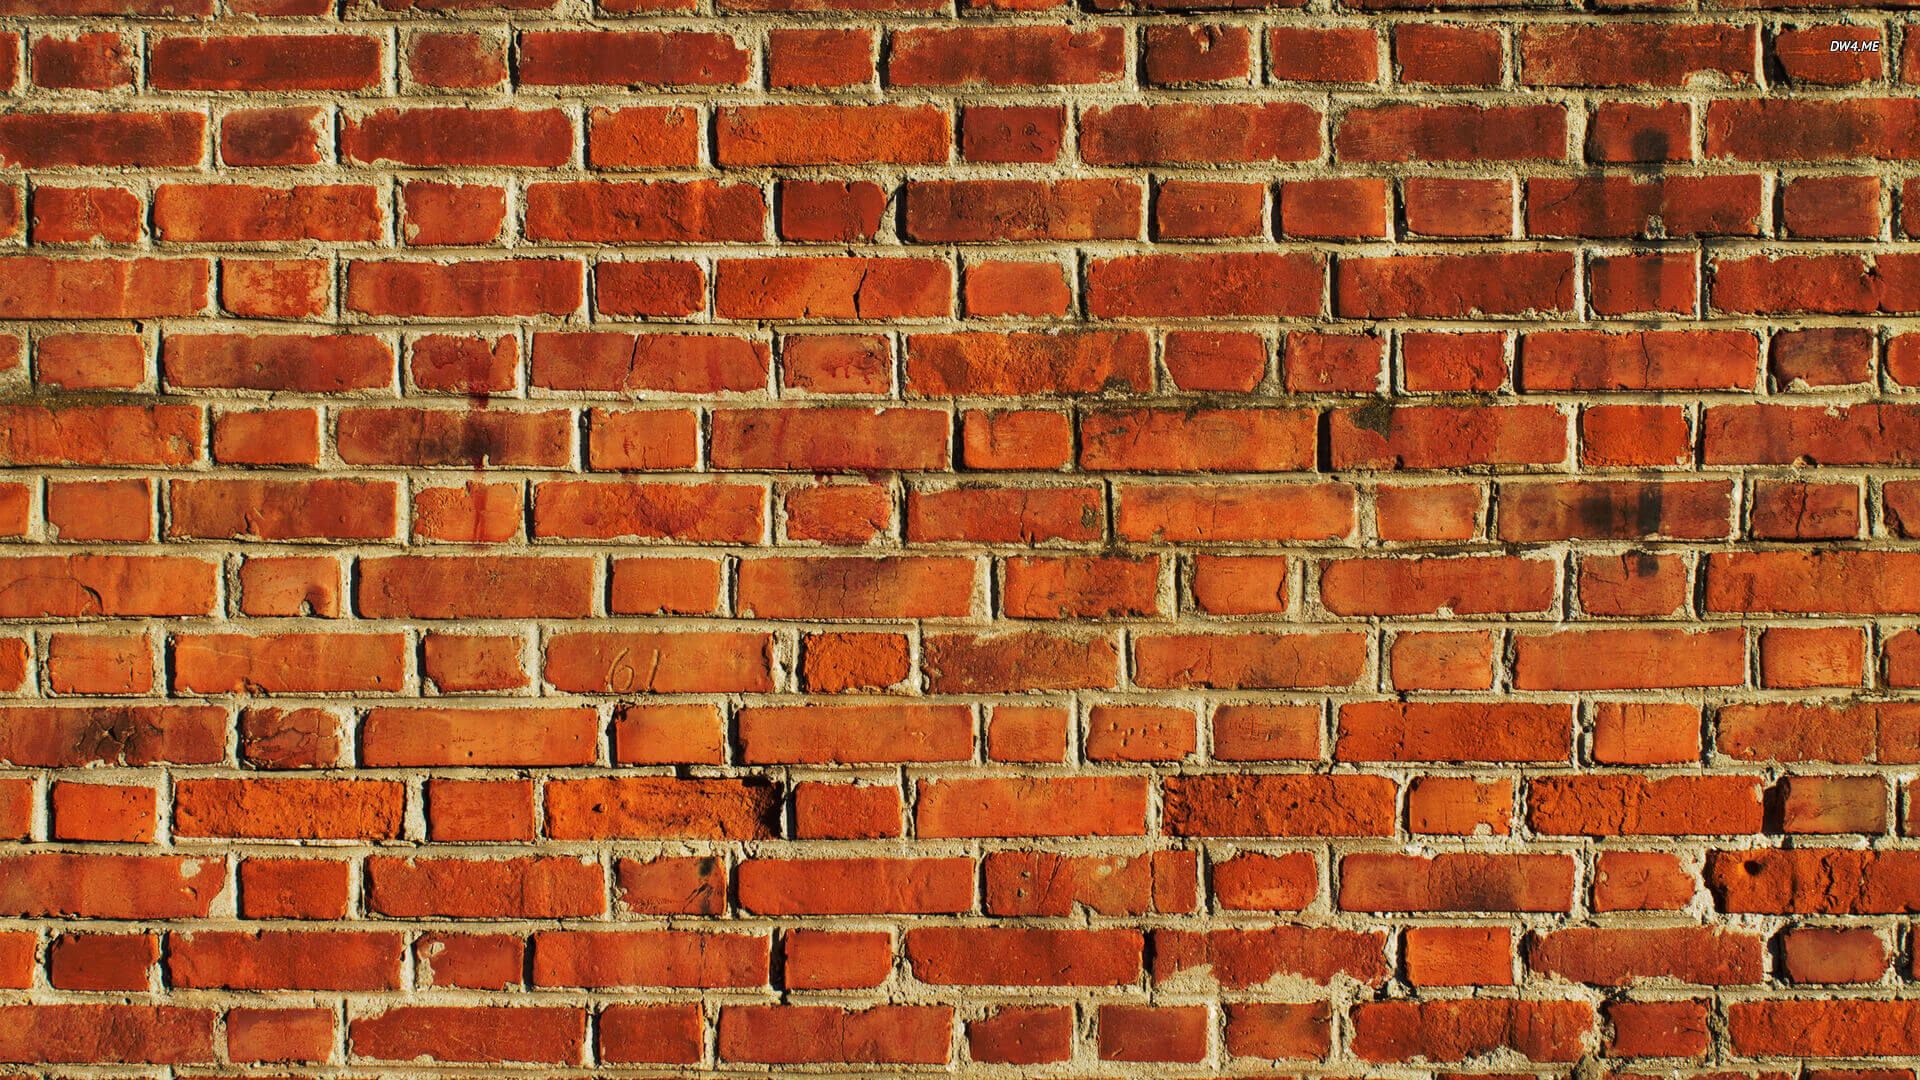 817 Brick Wall 1920x1080 Photography Wallpaper The Original